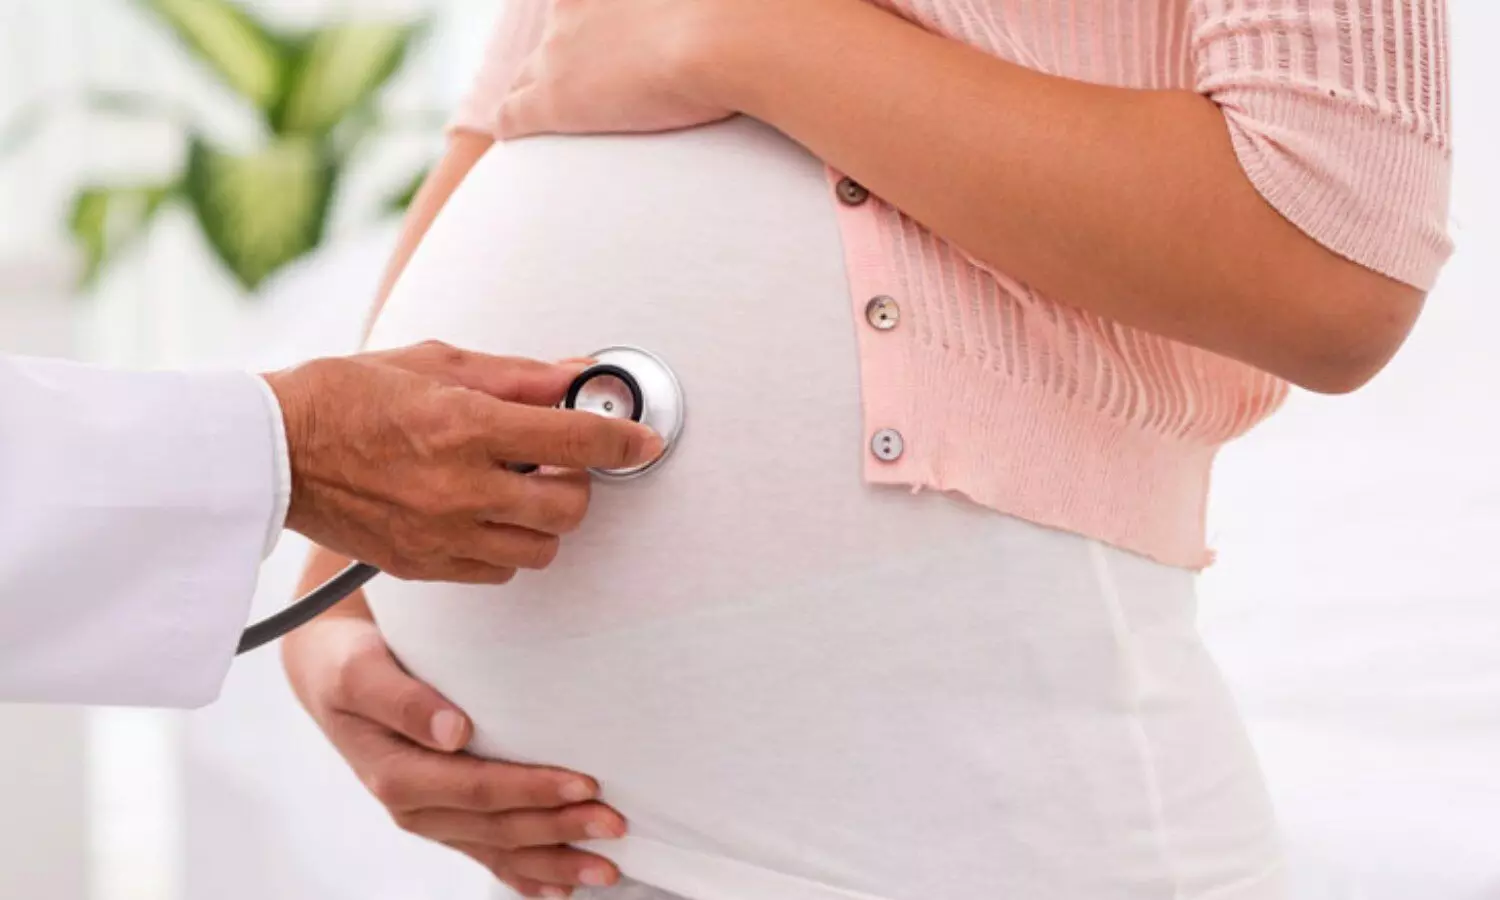 Preparing for free ultrasound test on PPP model for pregnant women